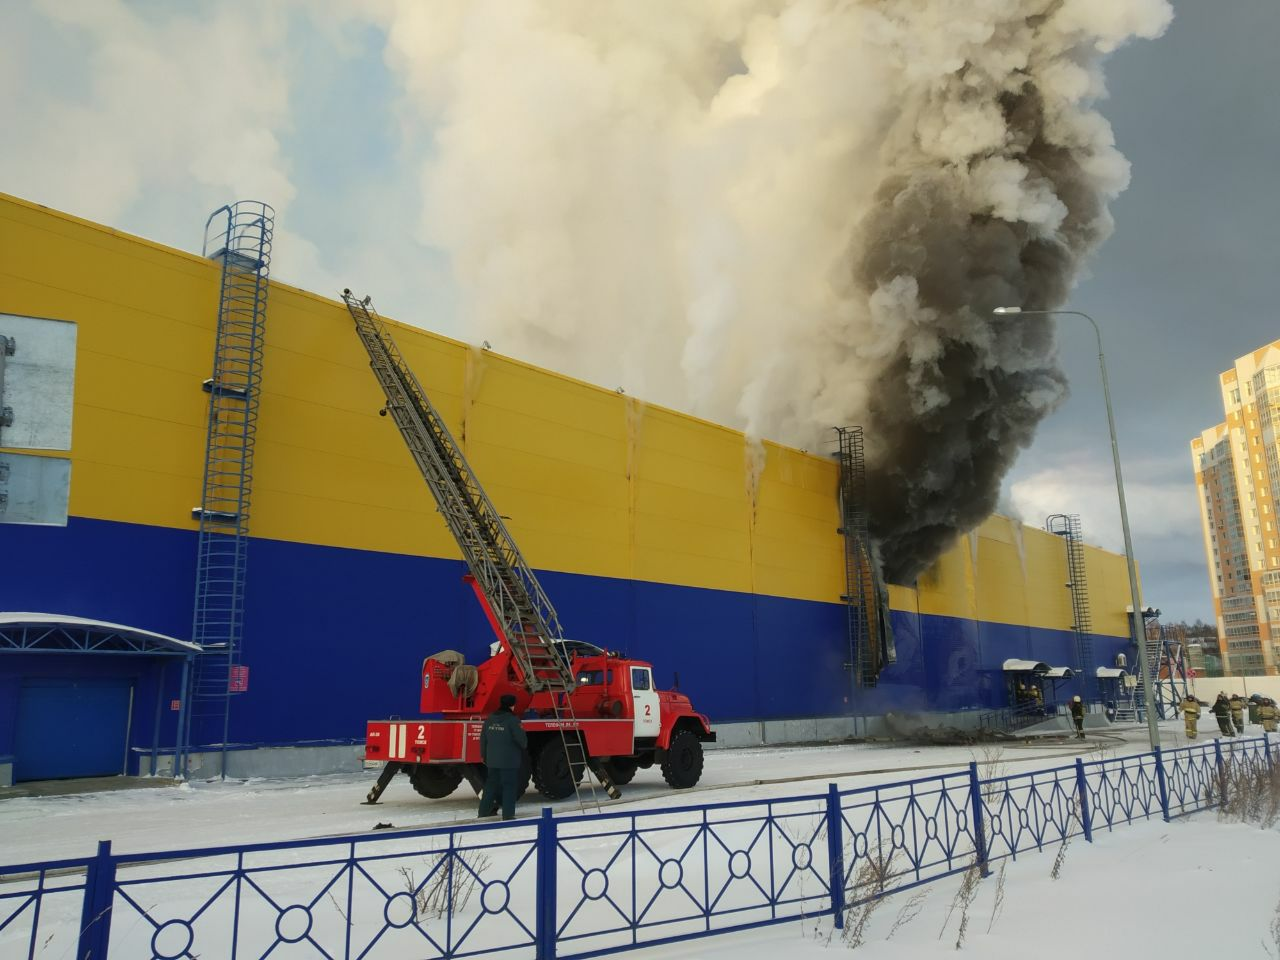 Супермаркет "Лента" горит в Томске - очевидцы